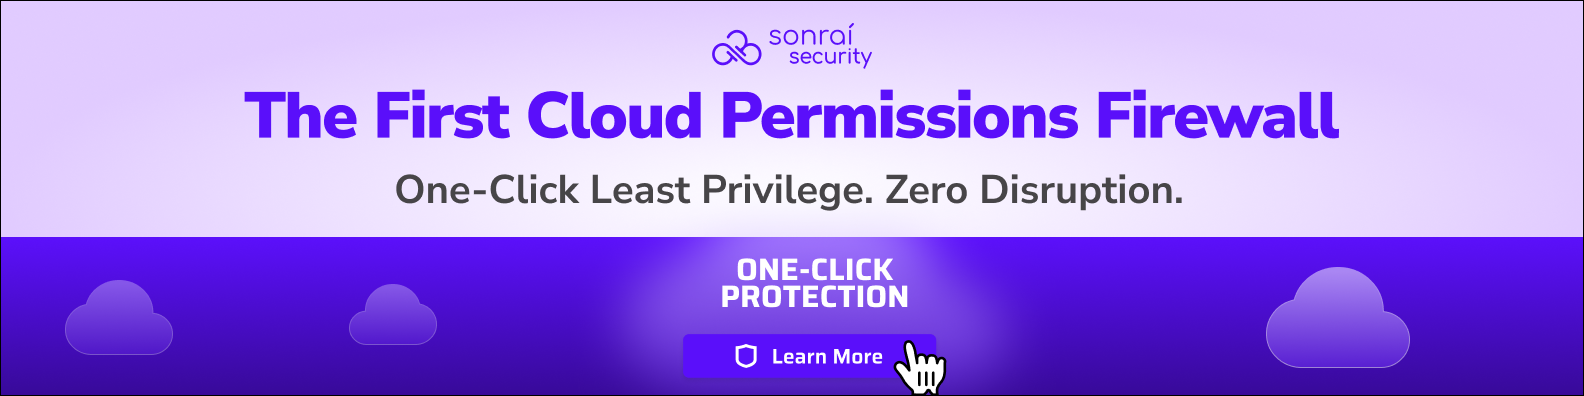 cloud permissions firewall cta